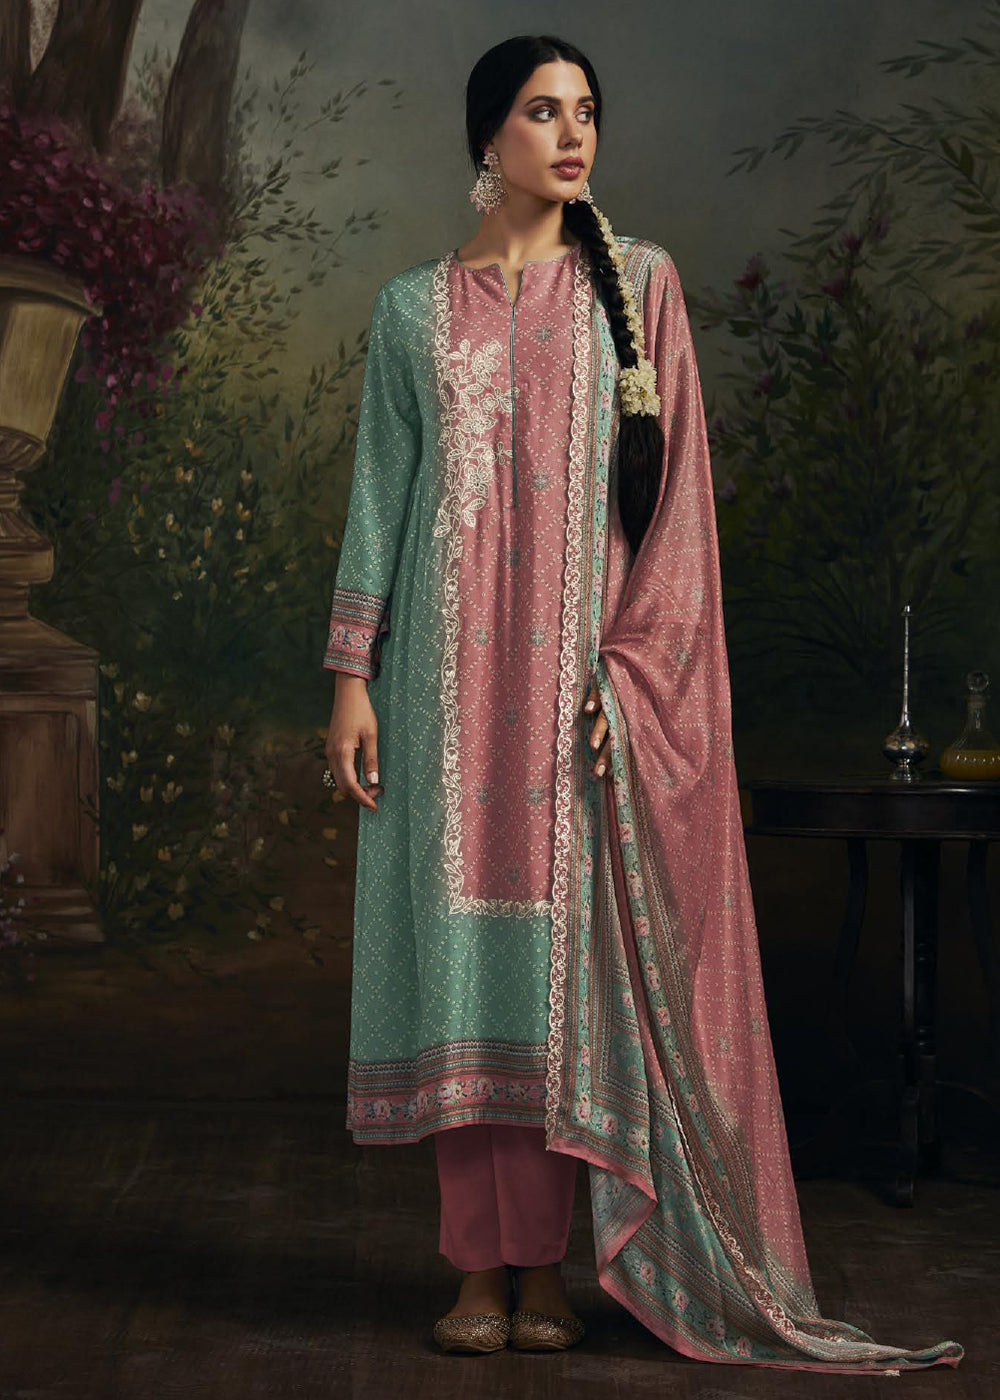 Buy Now Pakistani Style Sea Green  Digital Printed Salwar Suit Online in USA, UK, Canada, Germany, Australia & Worldwide at Empress Clothing. 